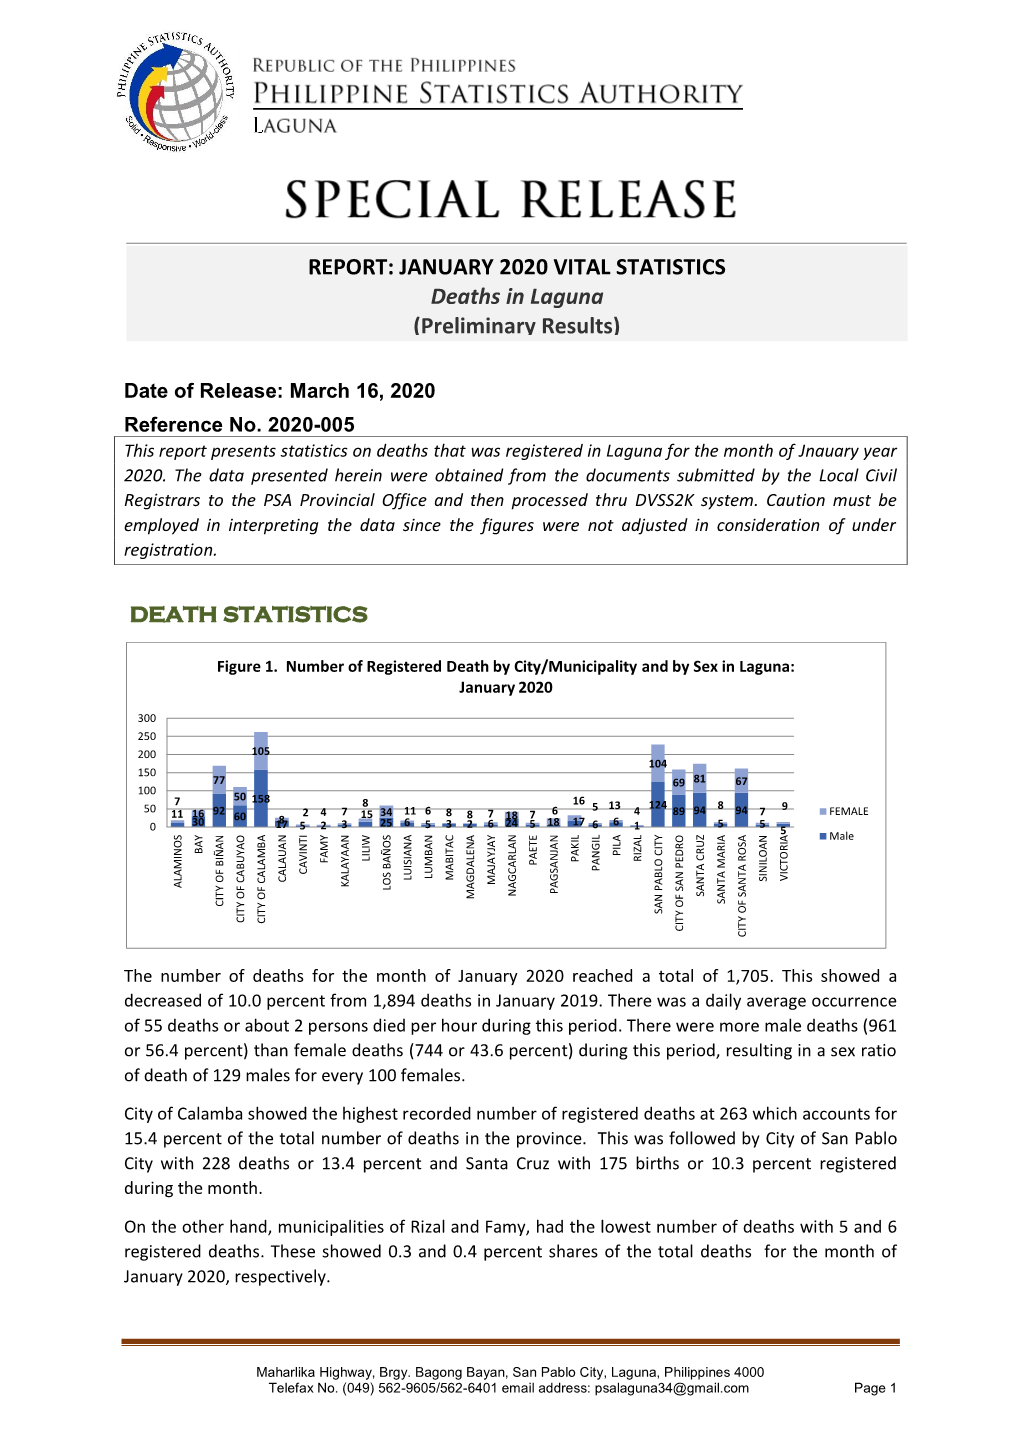 REPORT: JANUARY 2020 VITAL STATISTICS Deaths in Laguna (Preliminary Results)